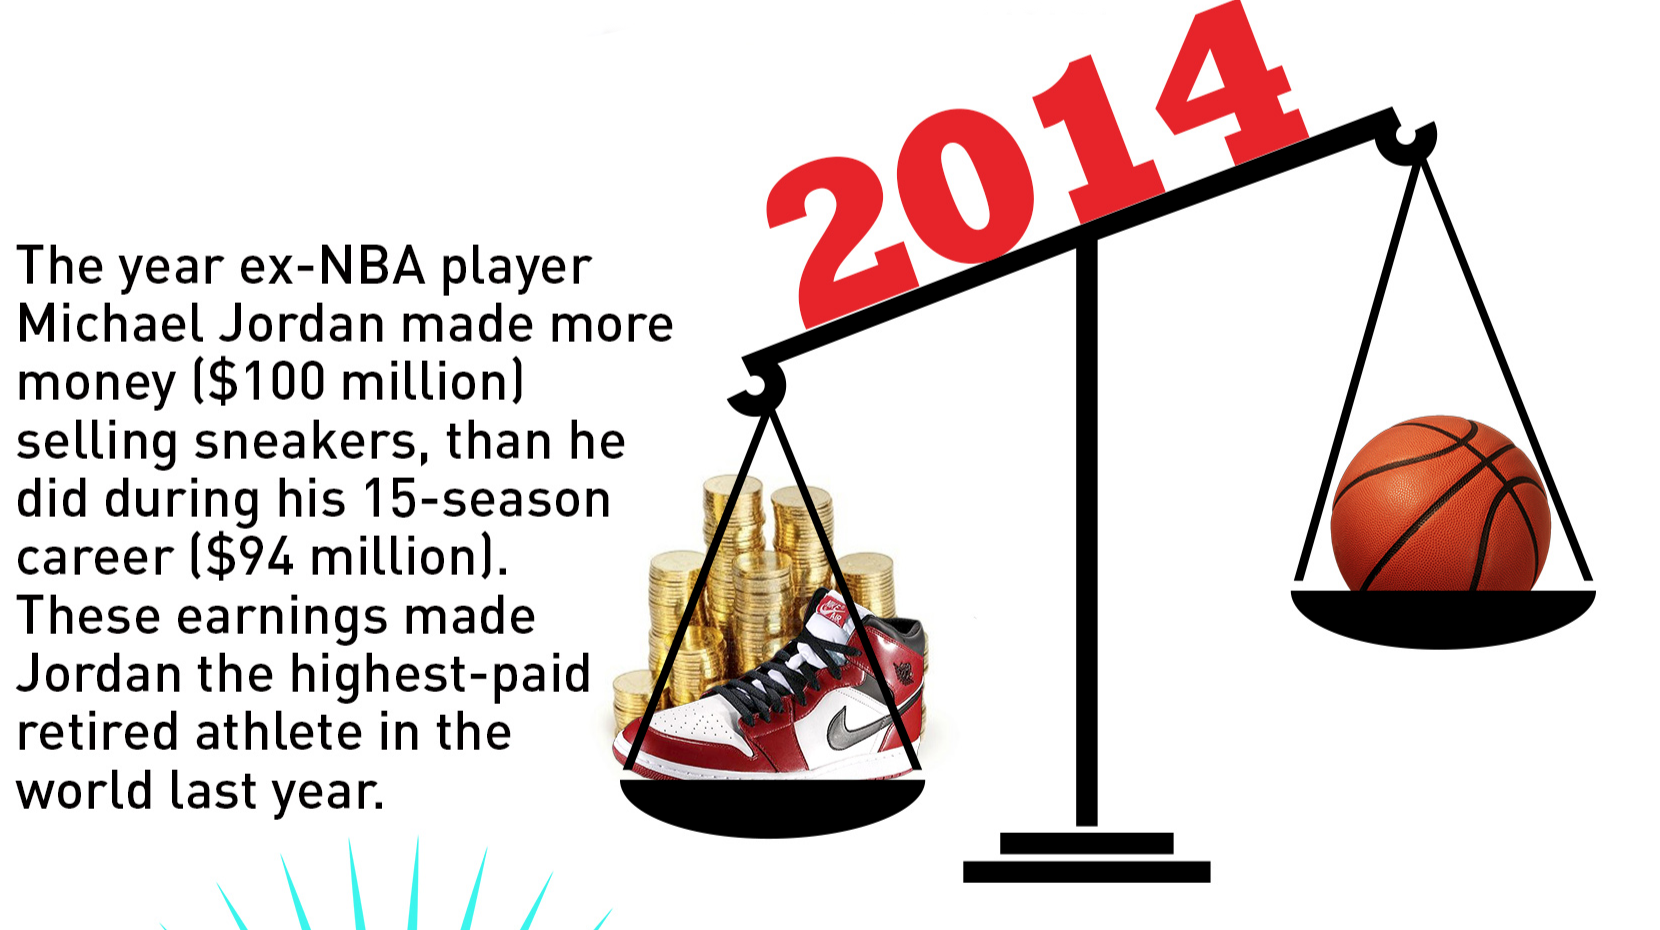 What were Michael Jordan's high school stats?